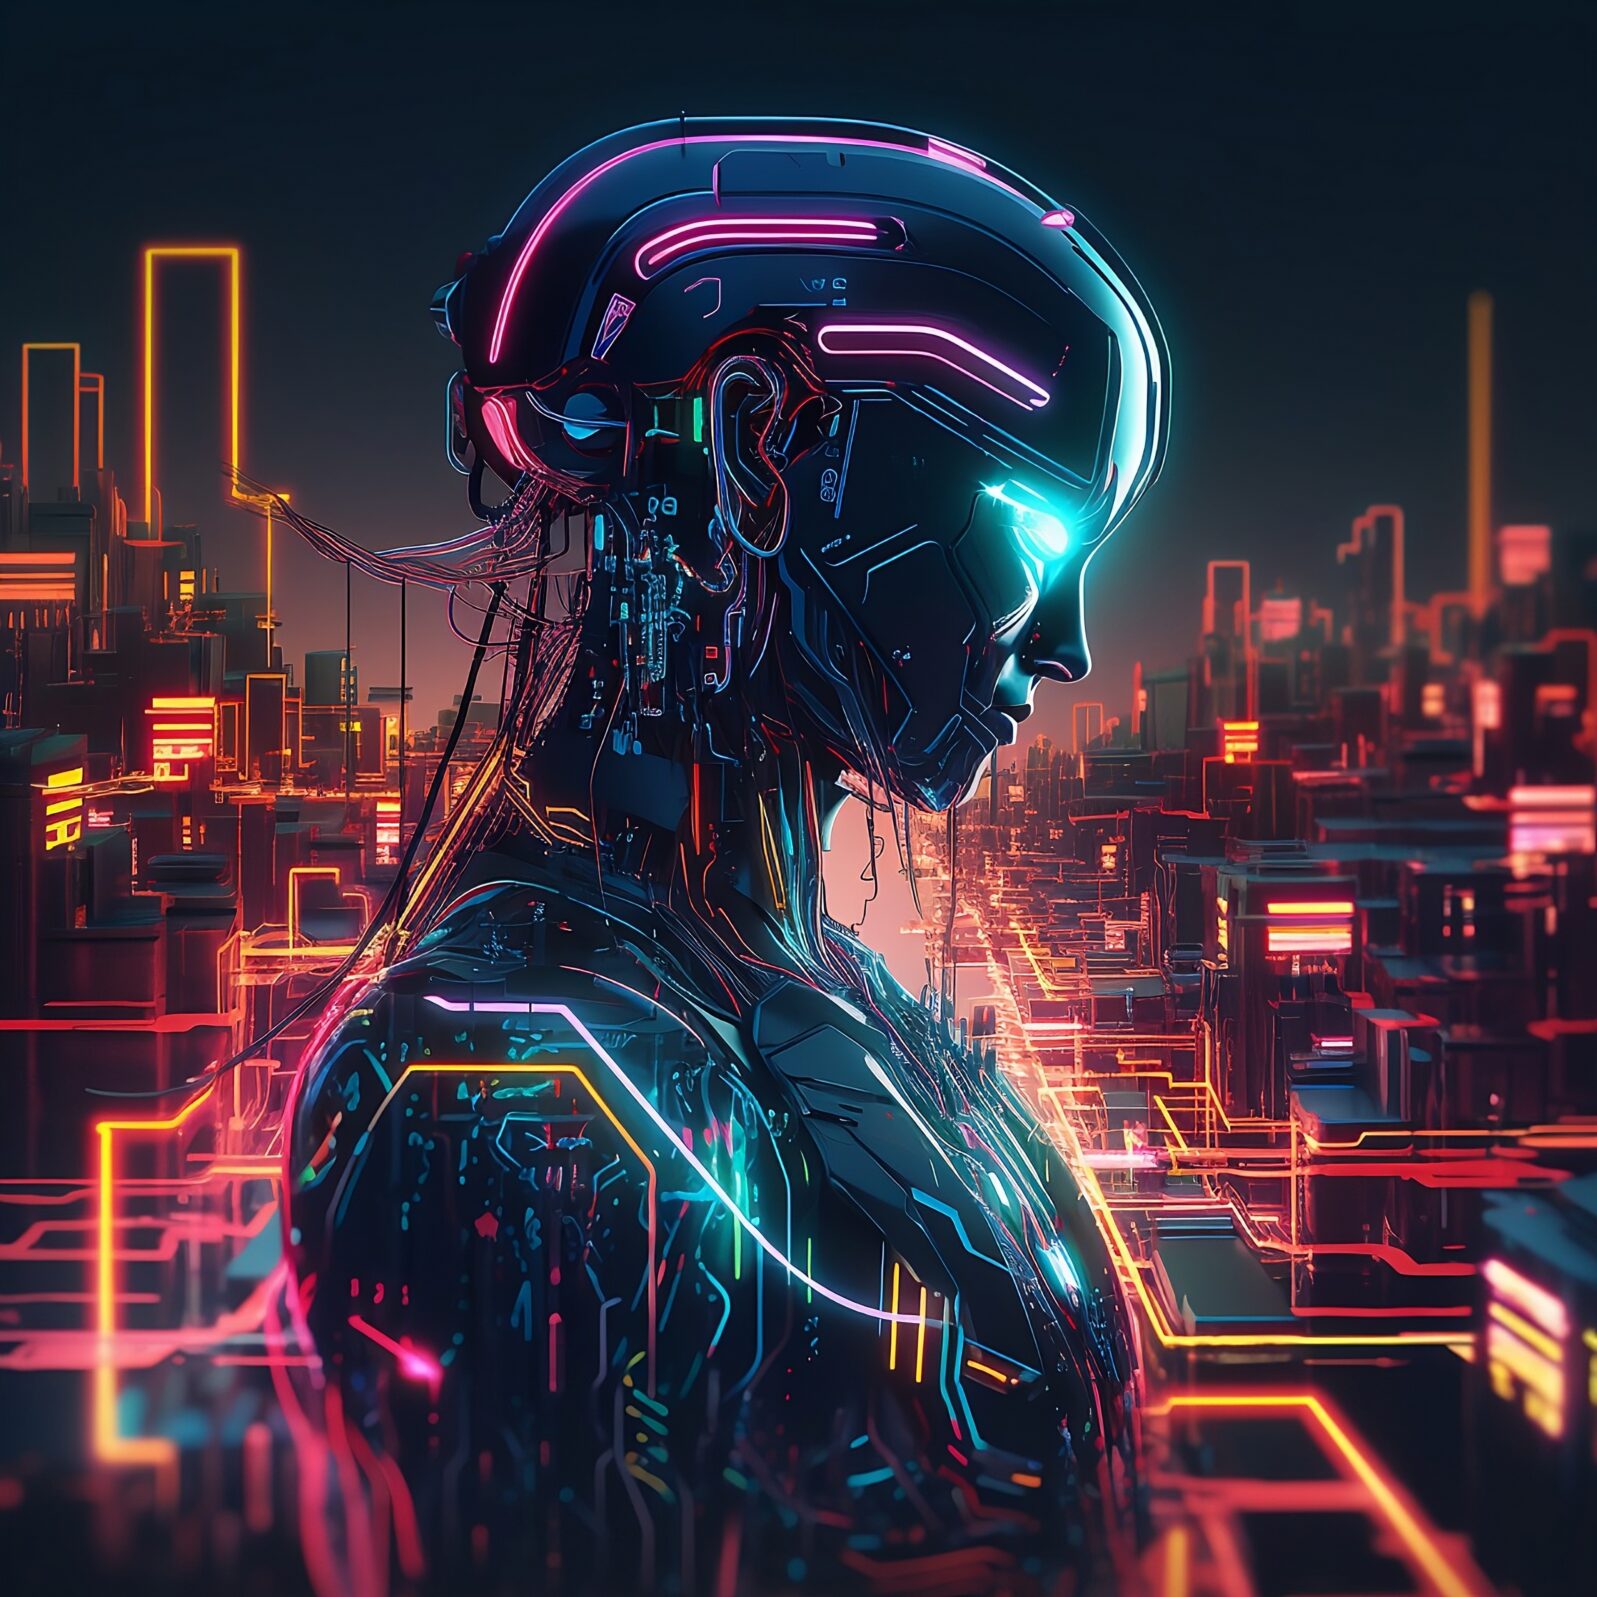 Post-Human Dystopia - A Cybernetic Future in Neon